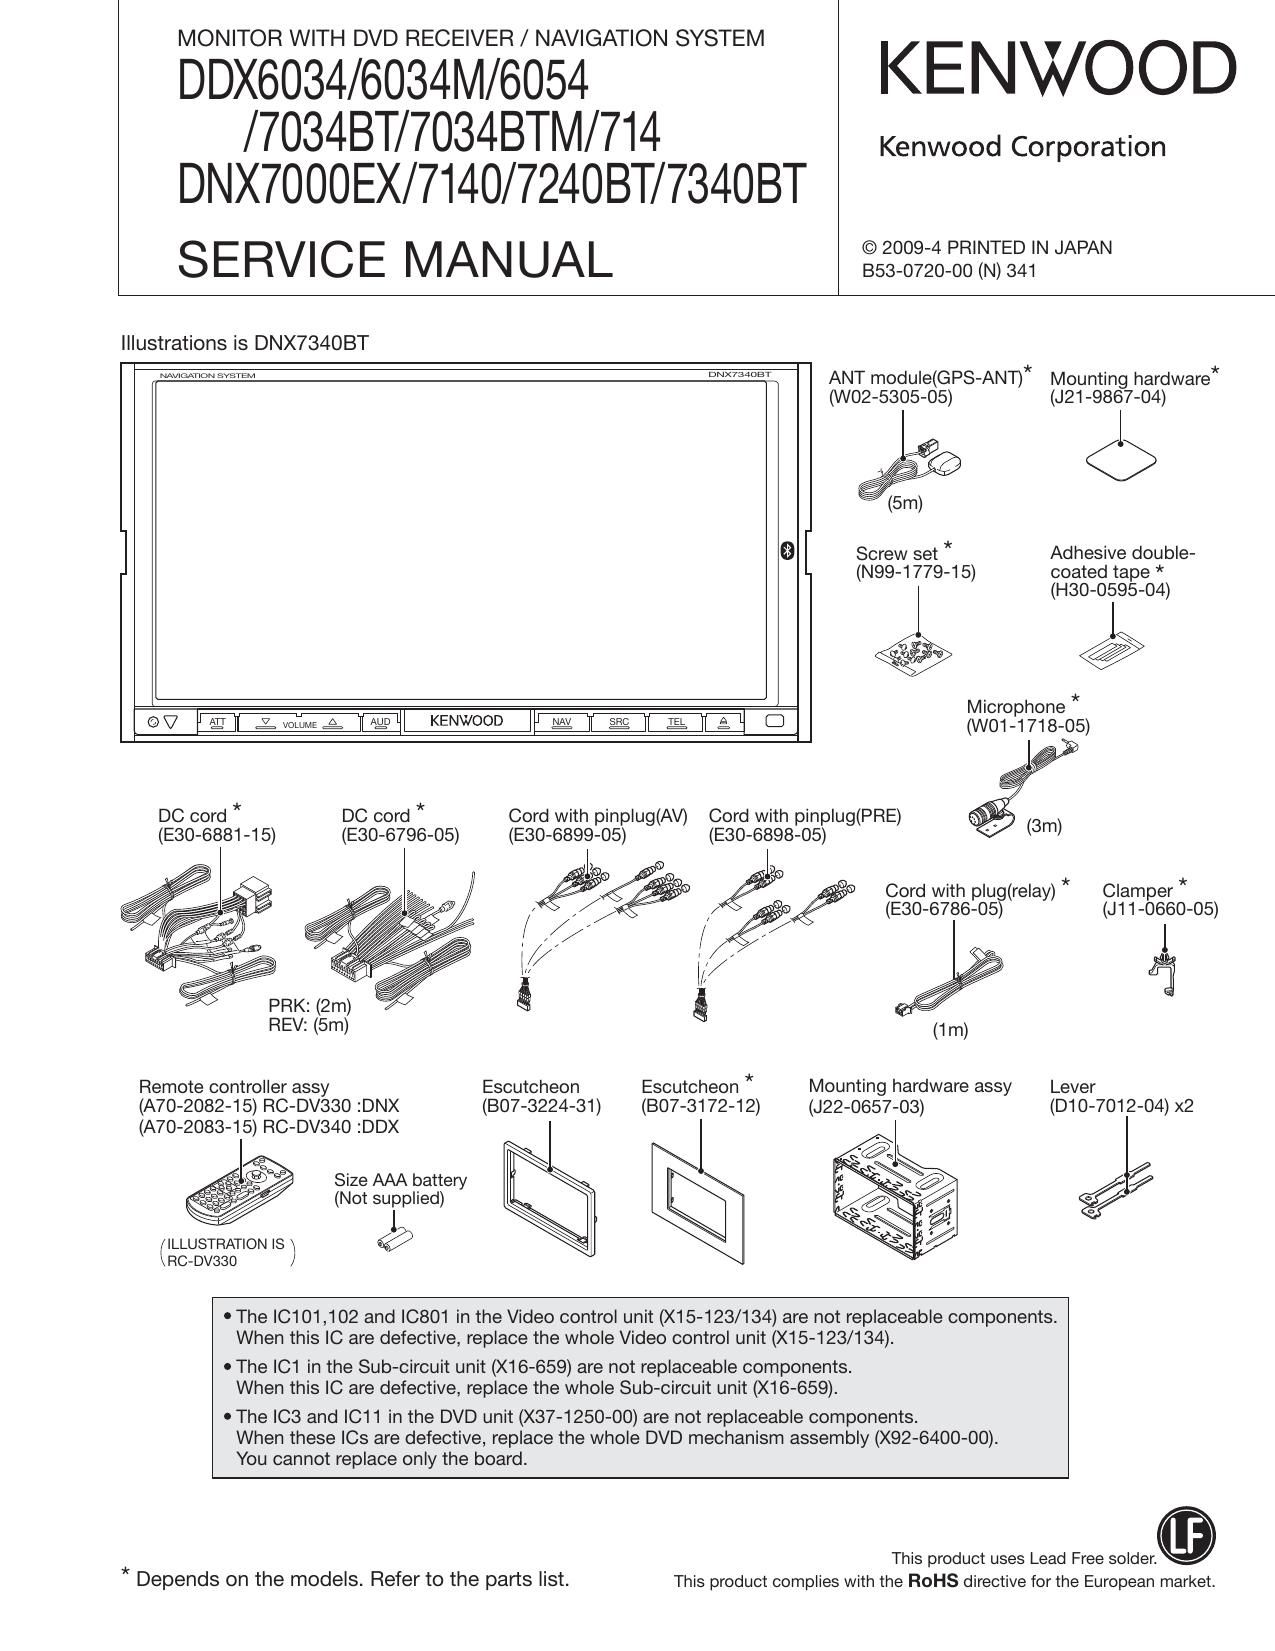 Kenwood DDX 6054 HU Service Manual